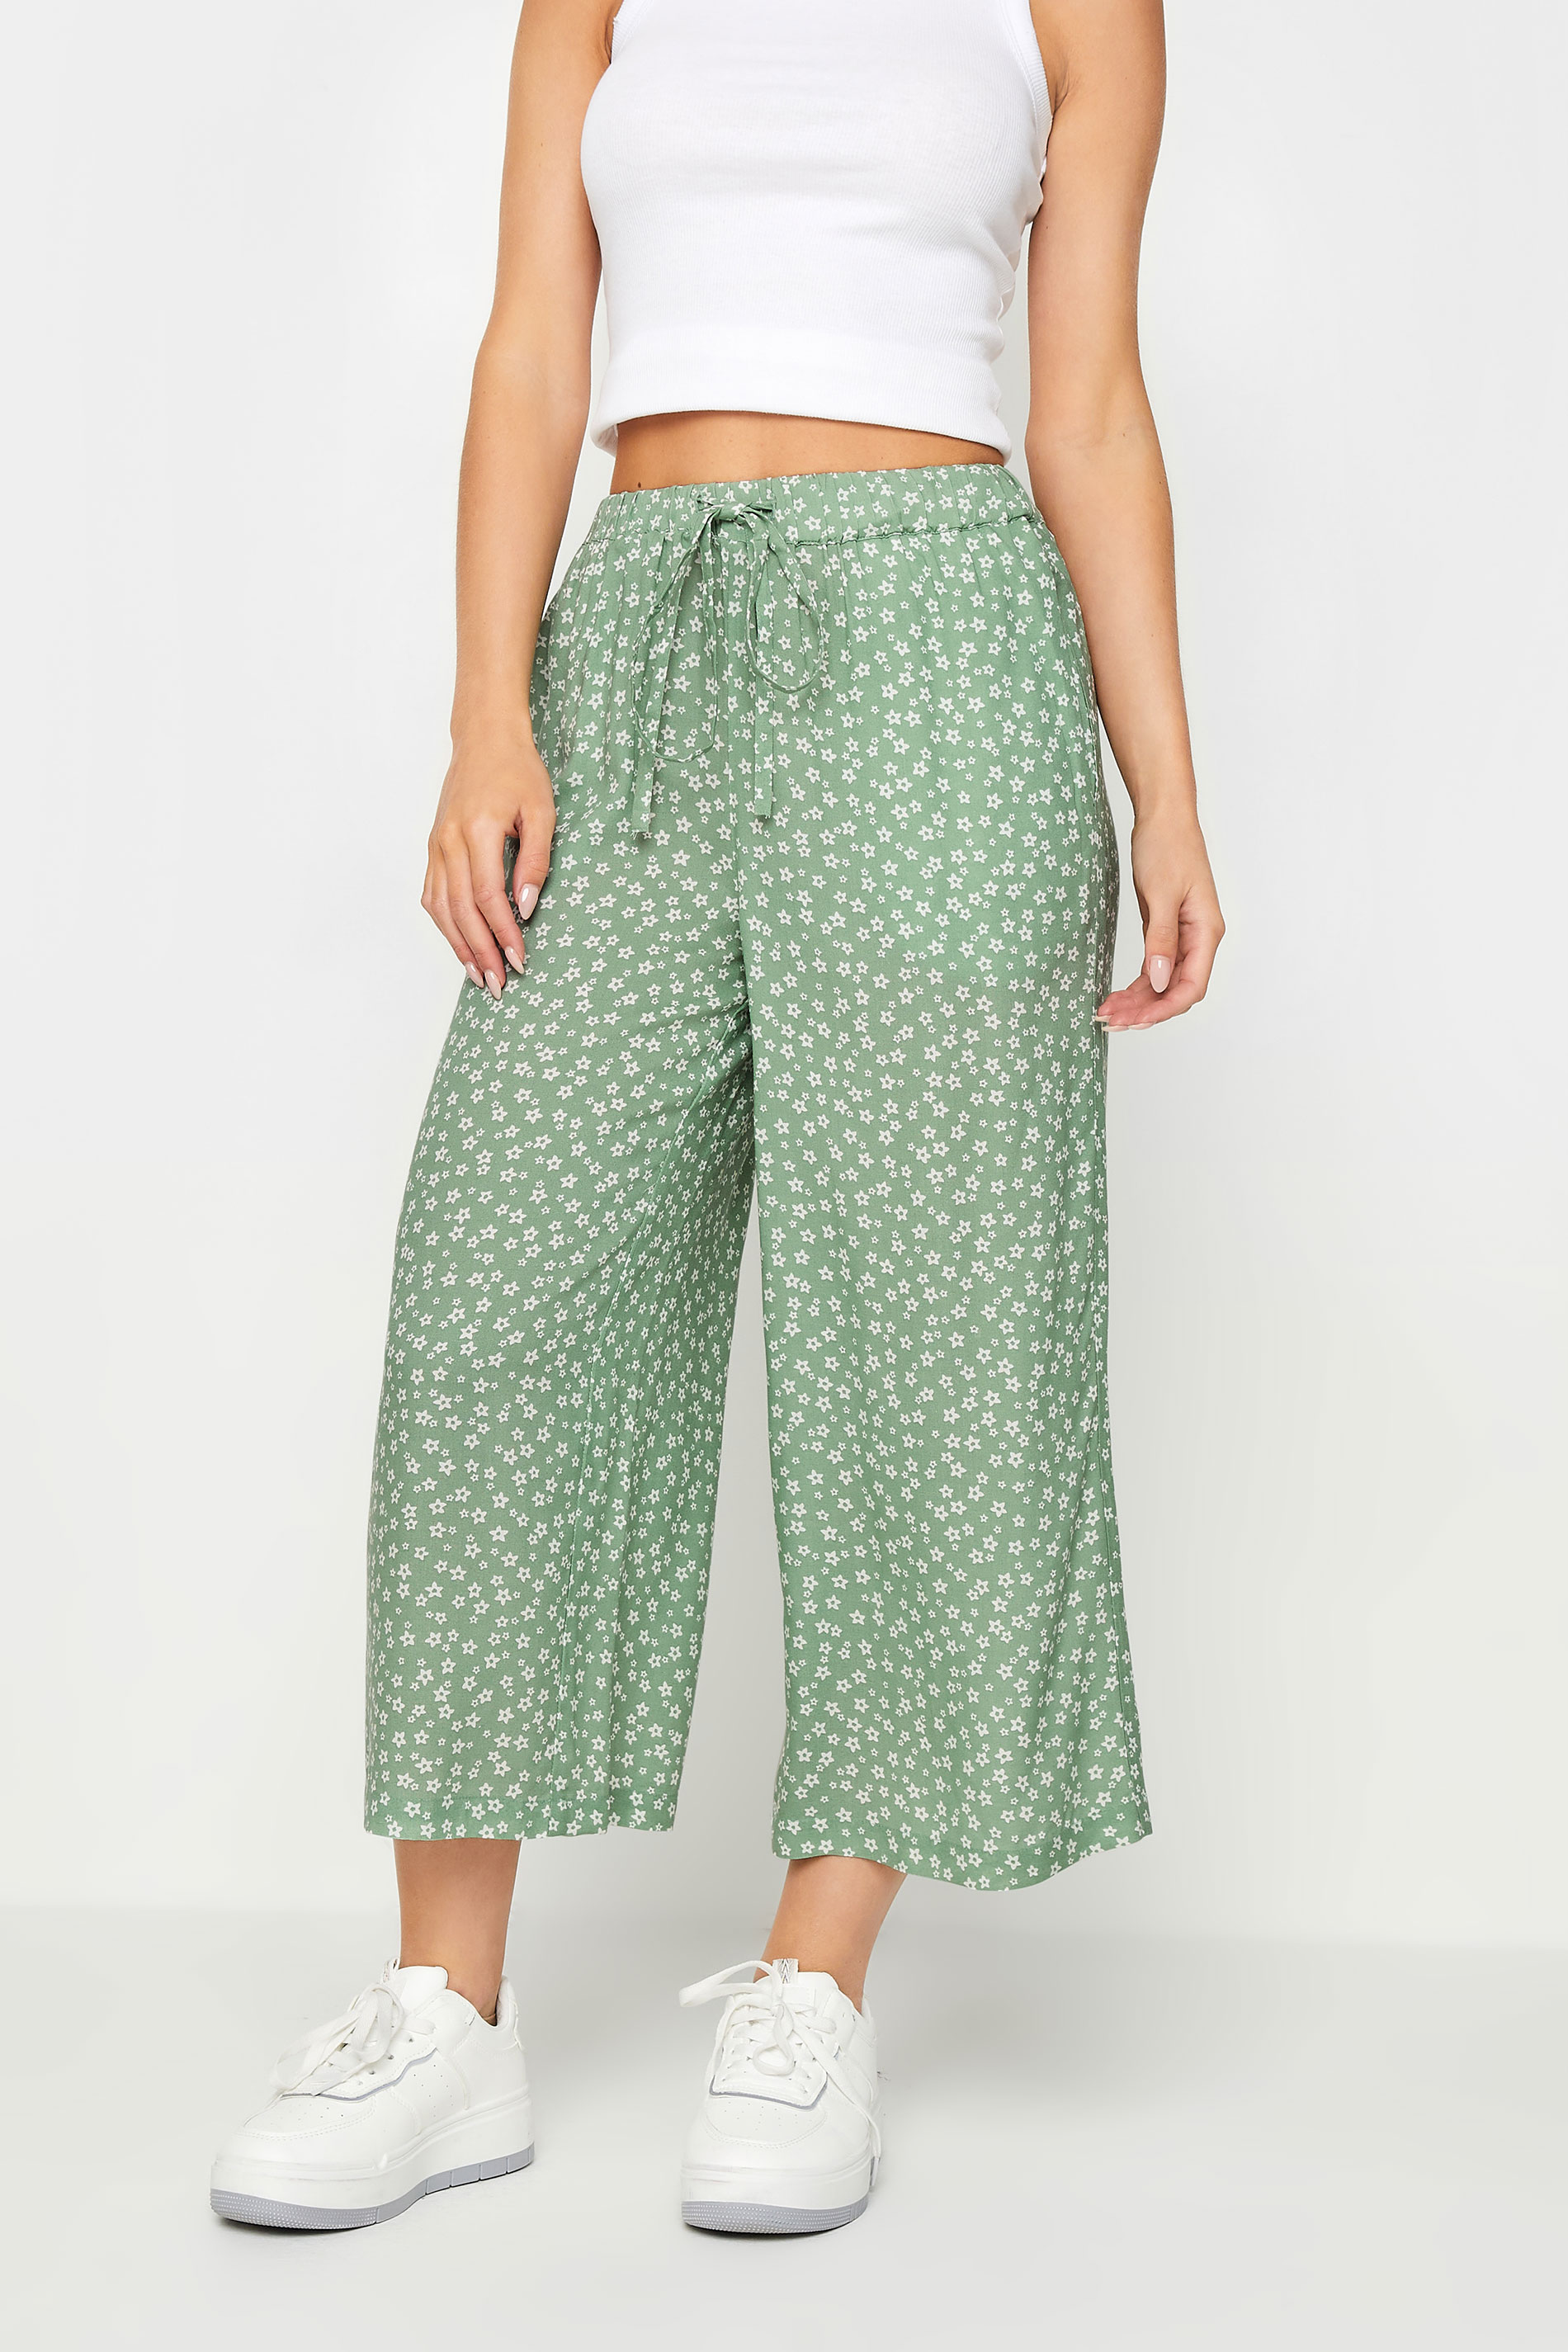 PixieGirl Petite Women's Sage Green Ditsy Floral Print Cropped Trousers | PixieGirl 2